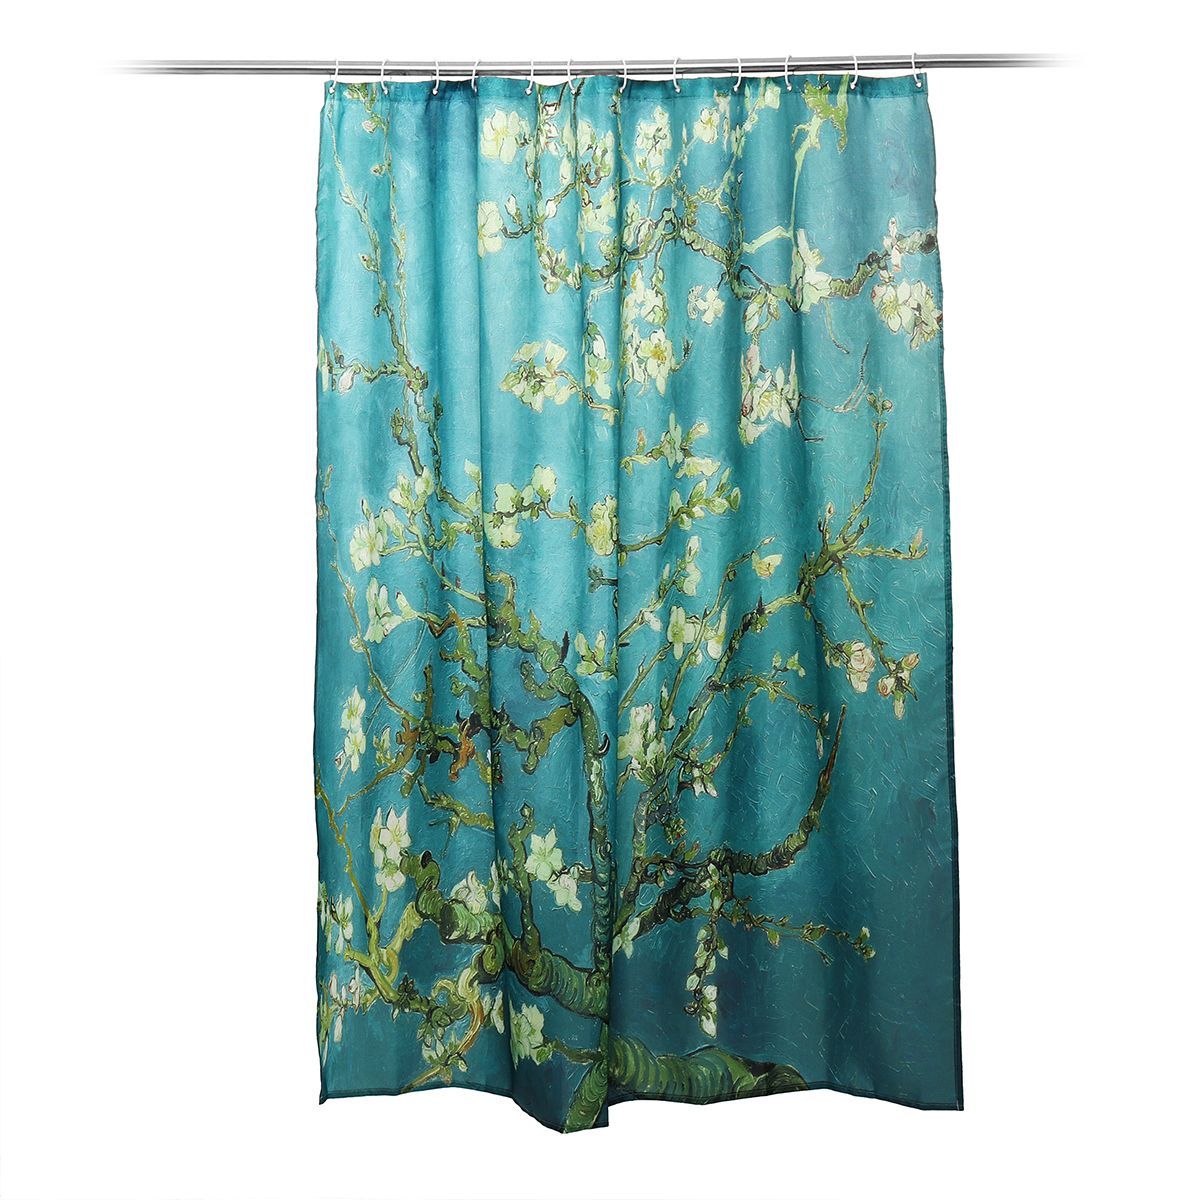 Flower-Waterproof-Shower-Curtain-Waterproof-Polyester-Fabric-Bathroom-Curtains-for-12-Hooks-1552627